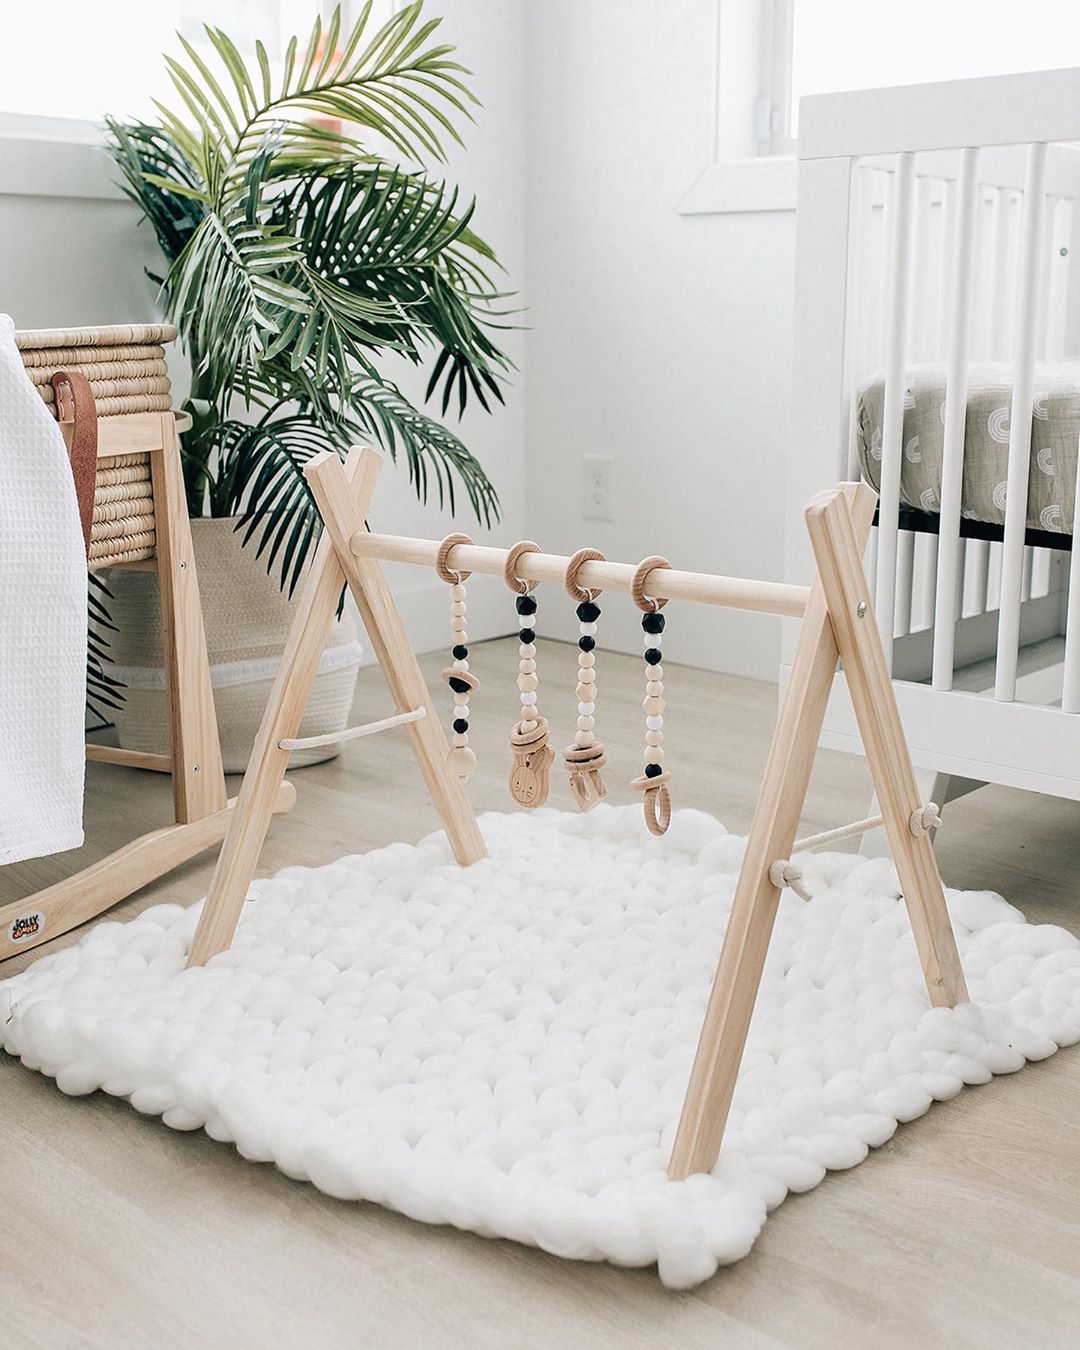 Plush baby mat under toy. Photo by Instagram user @poppyseed.play